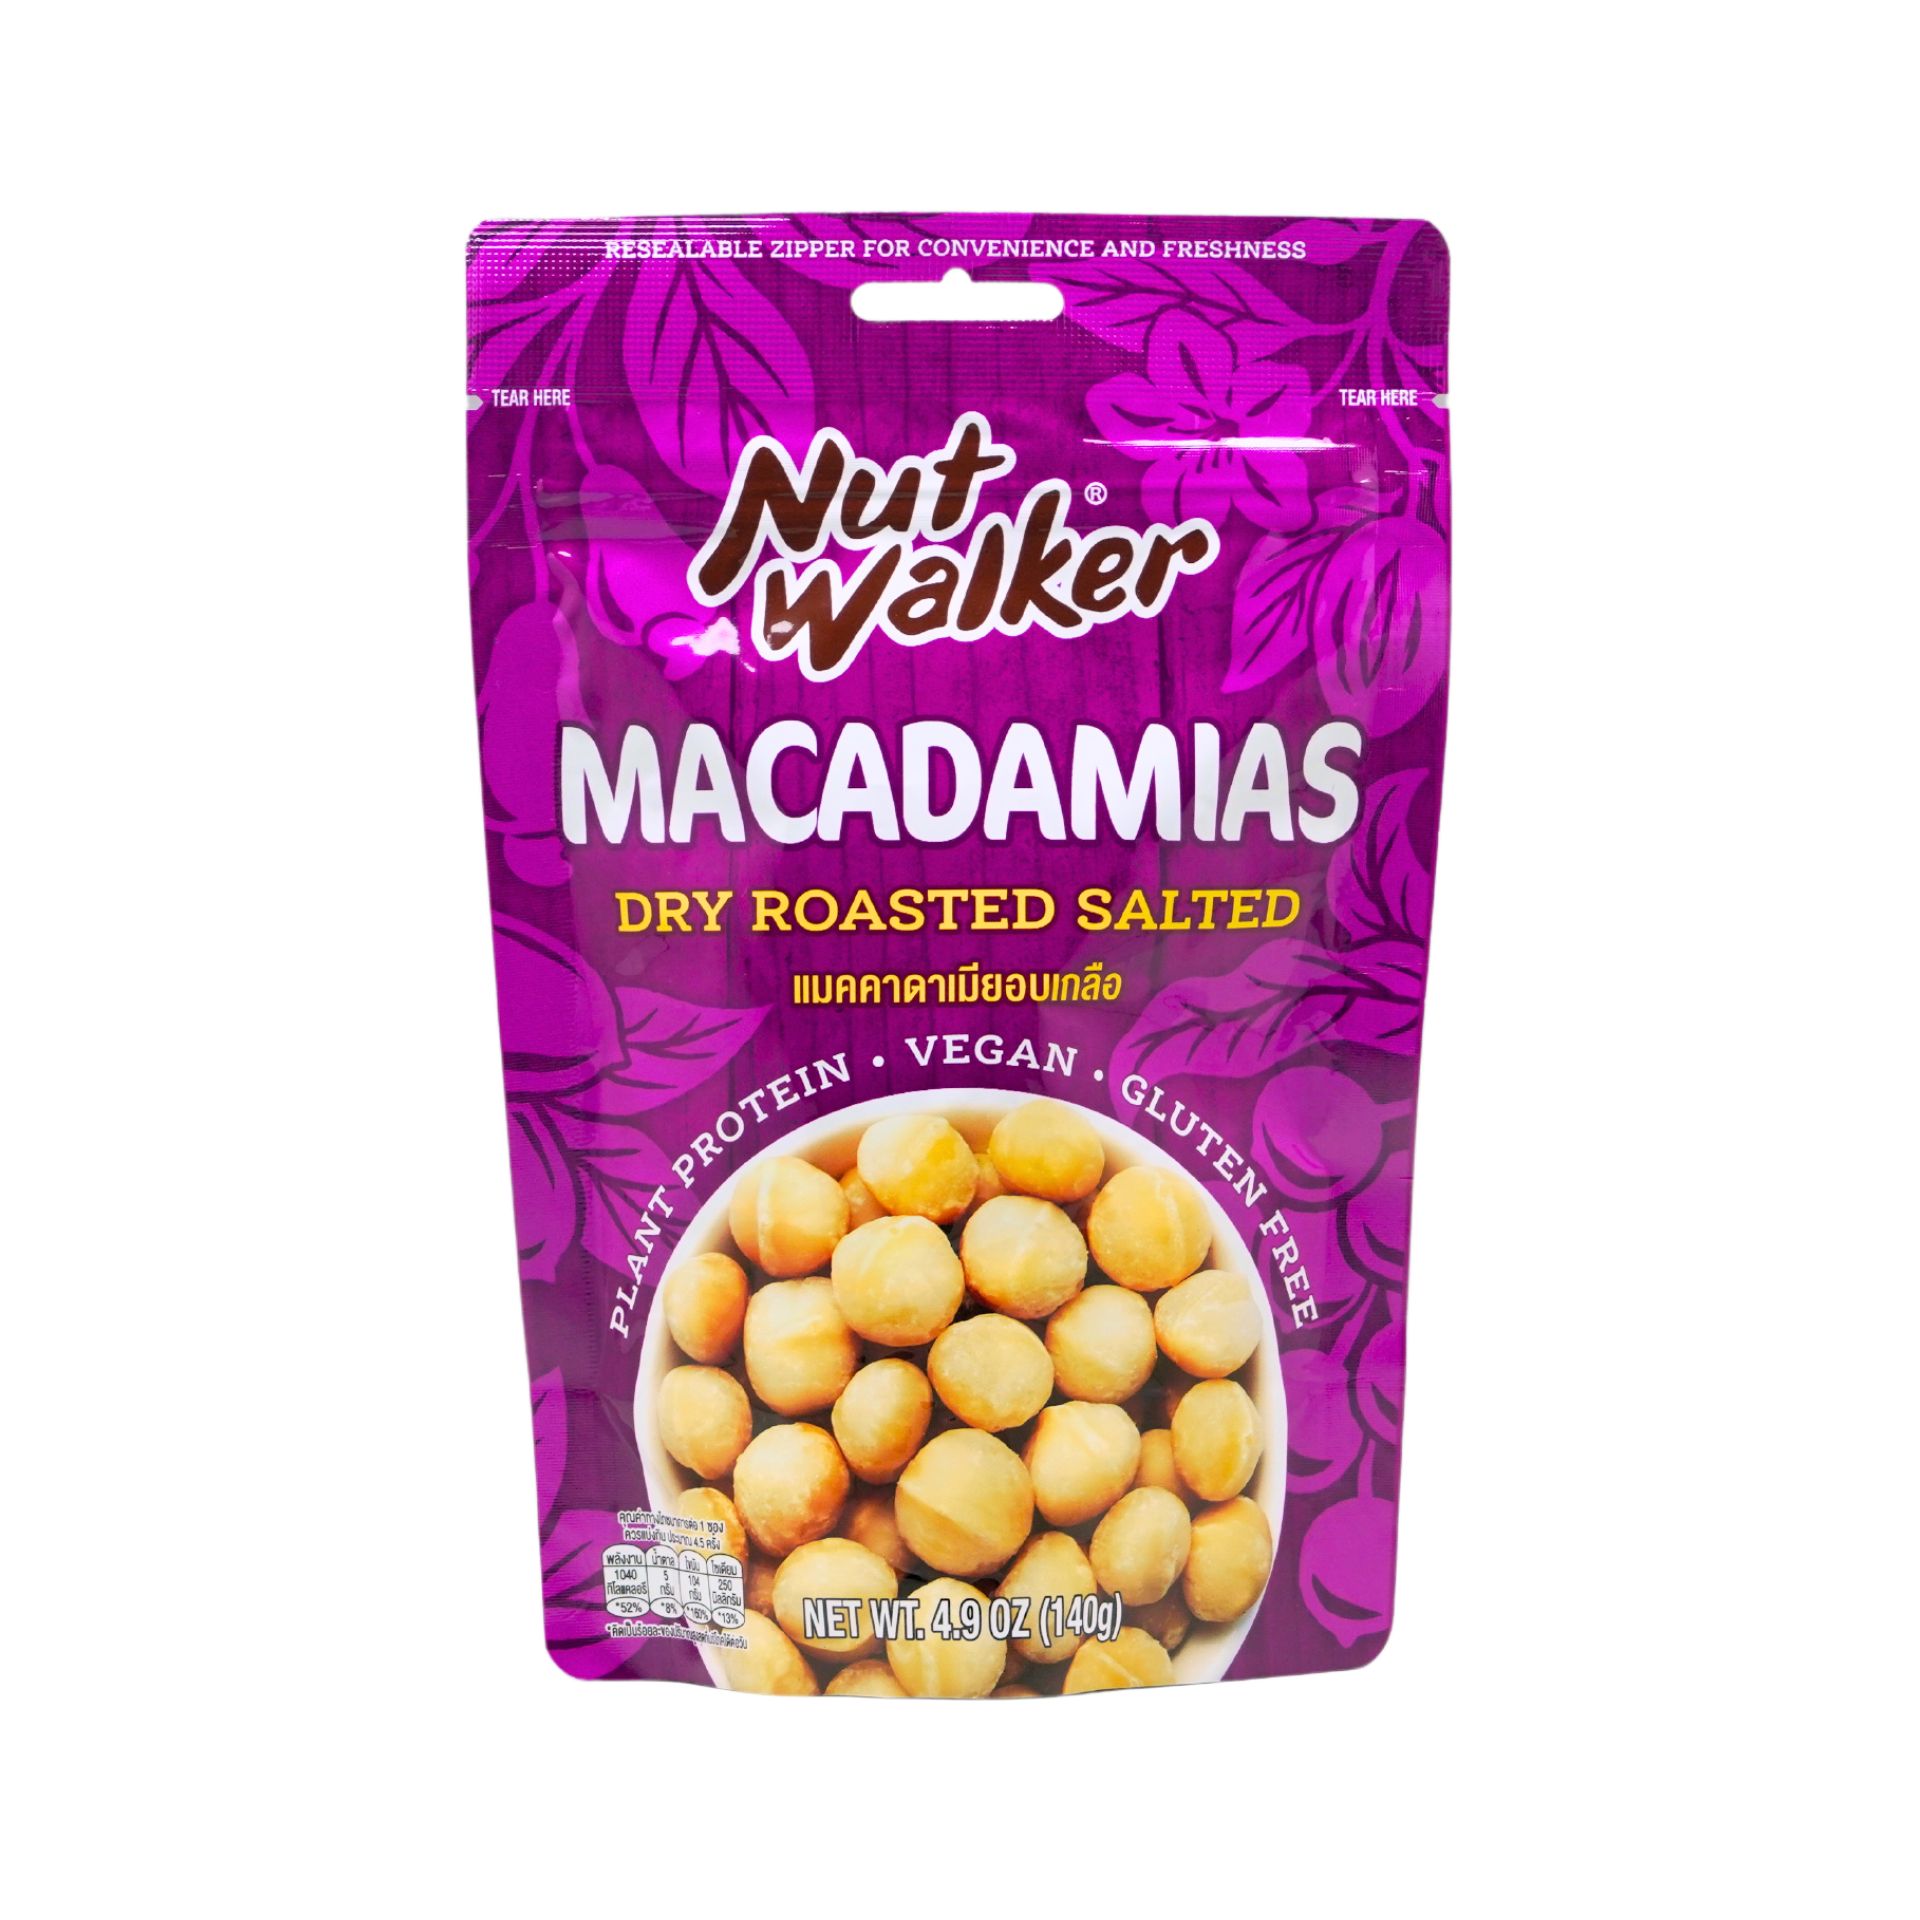 Nutwalker Dry Roasted Salted Macadamias (140g)